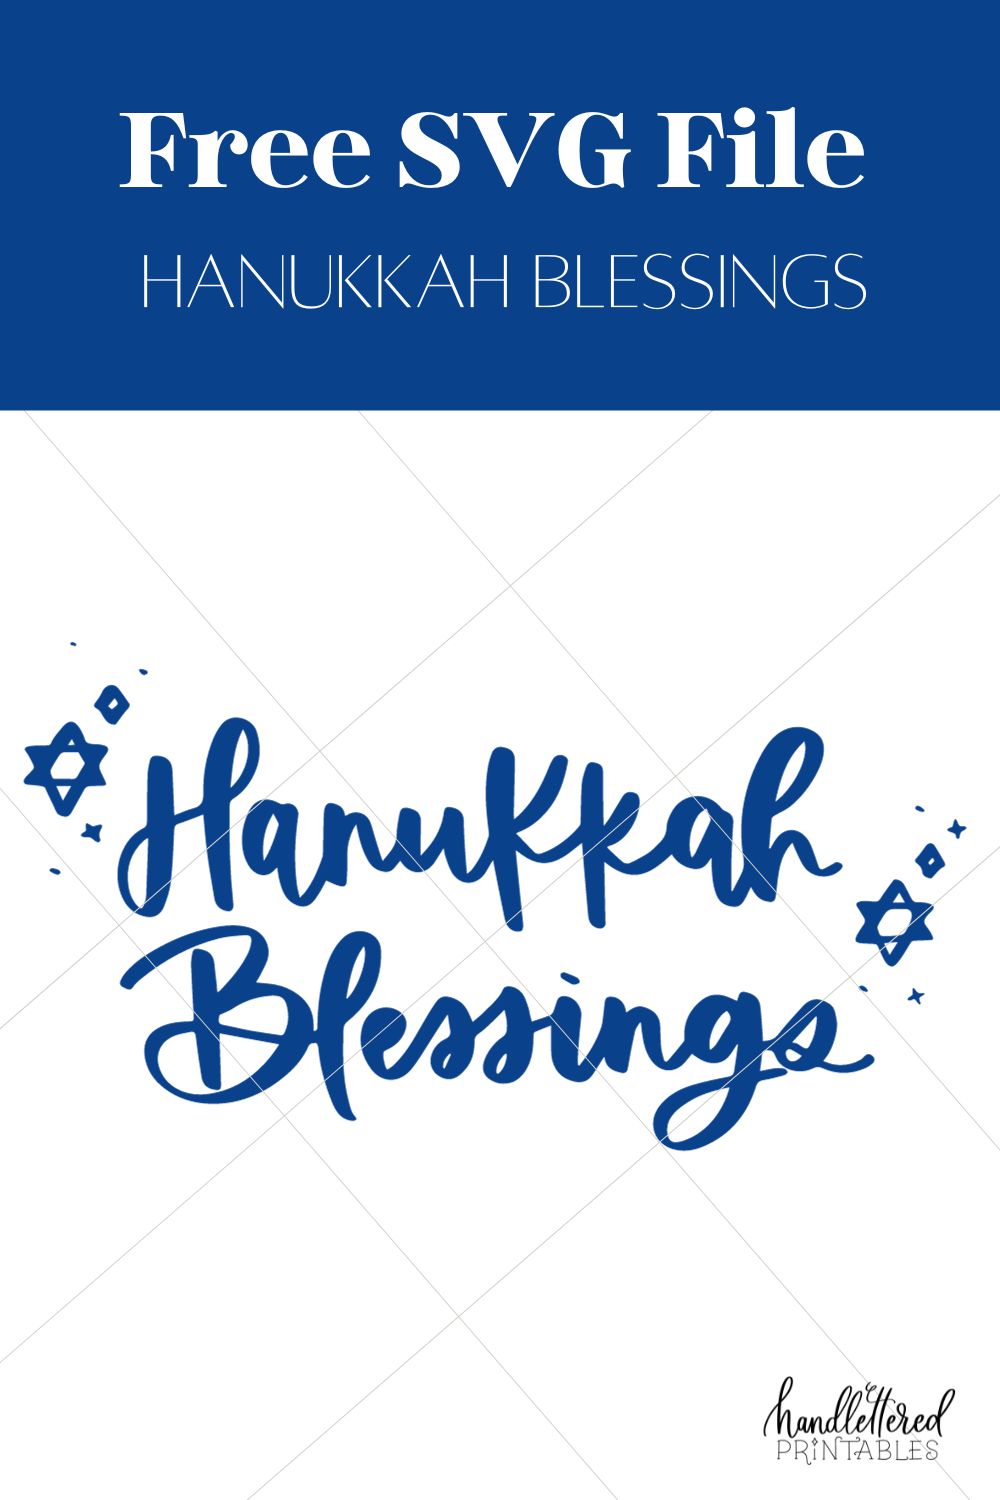 Free SVG file: Hanukkah Blessings